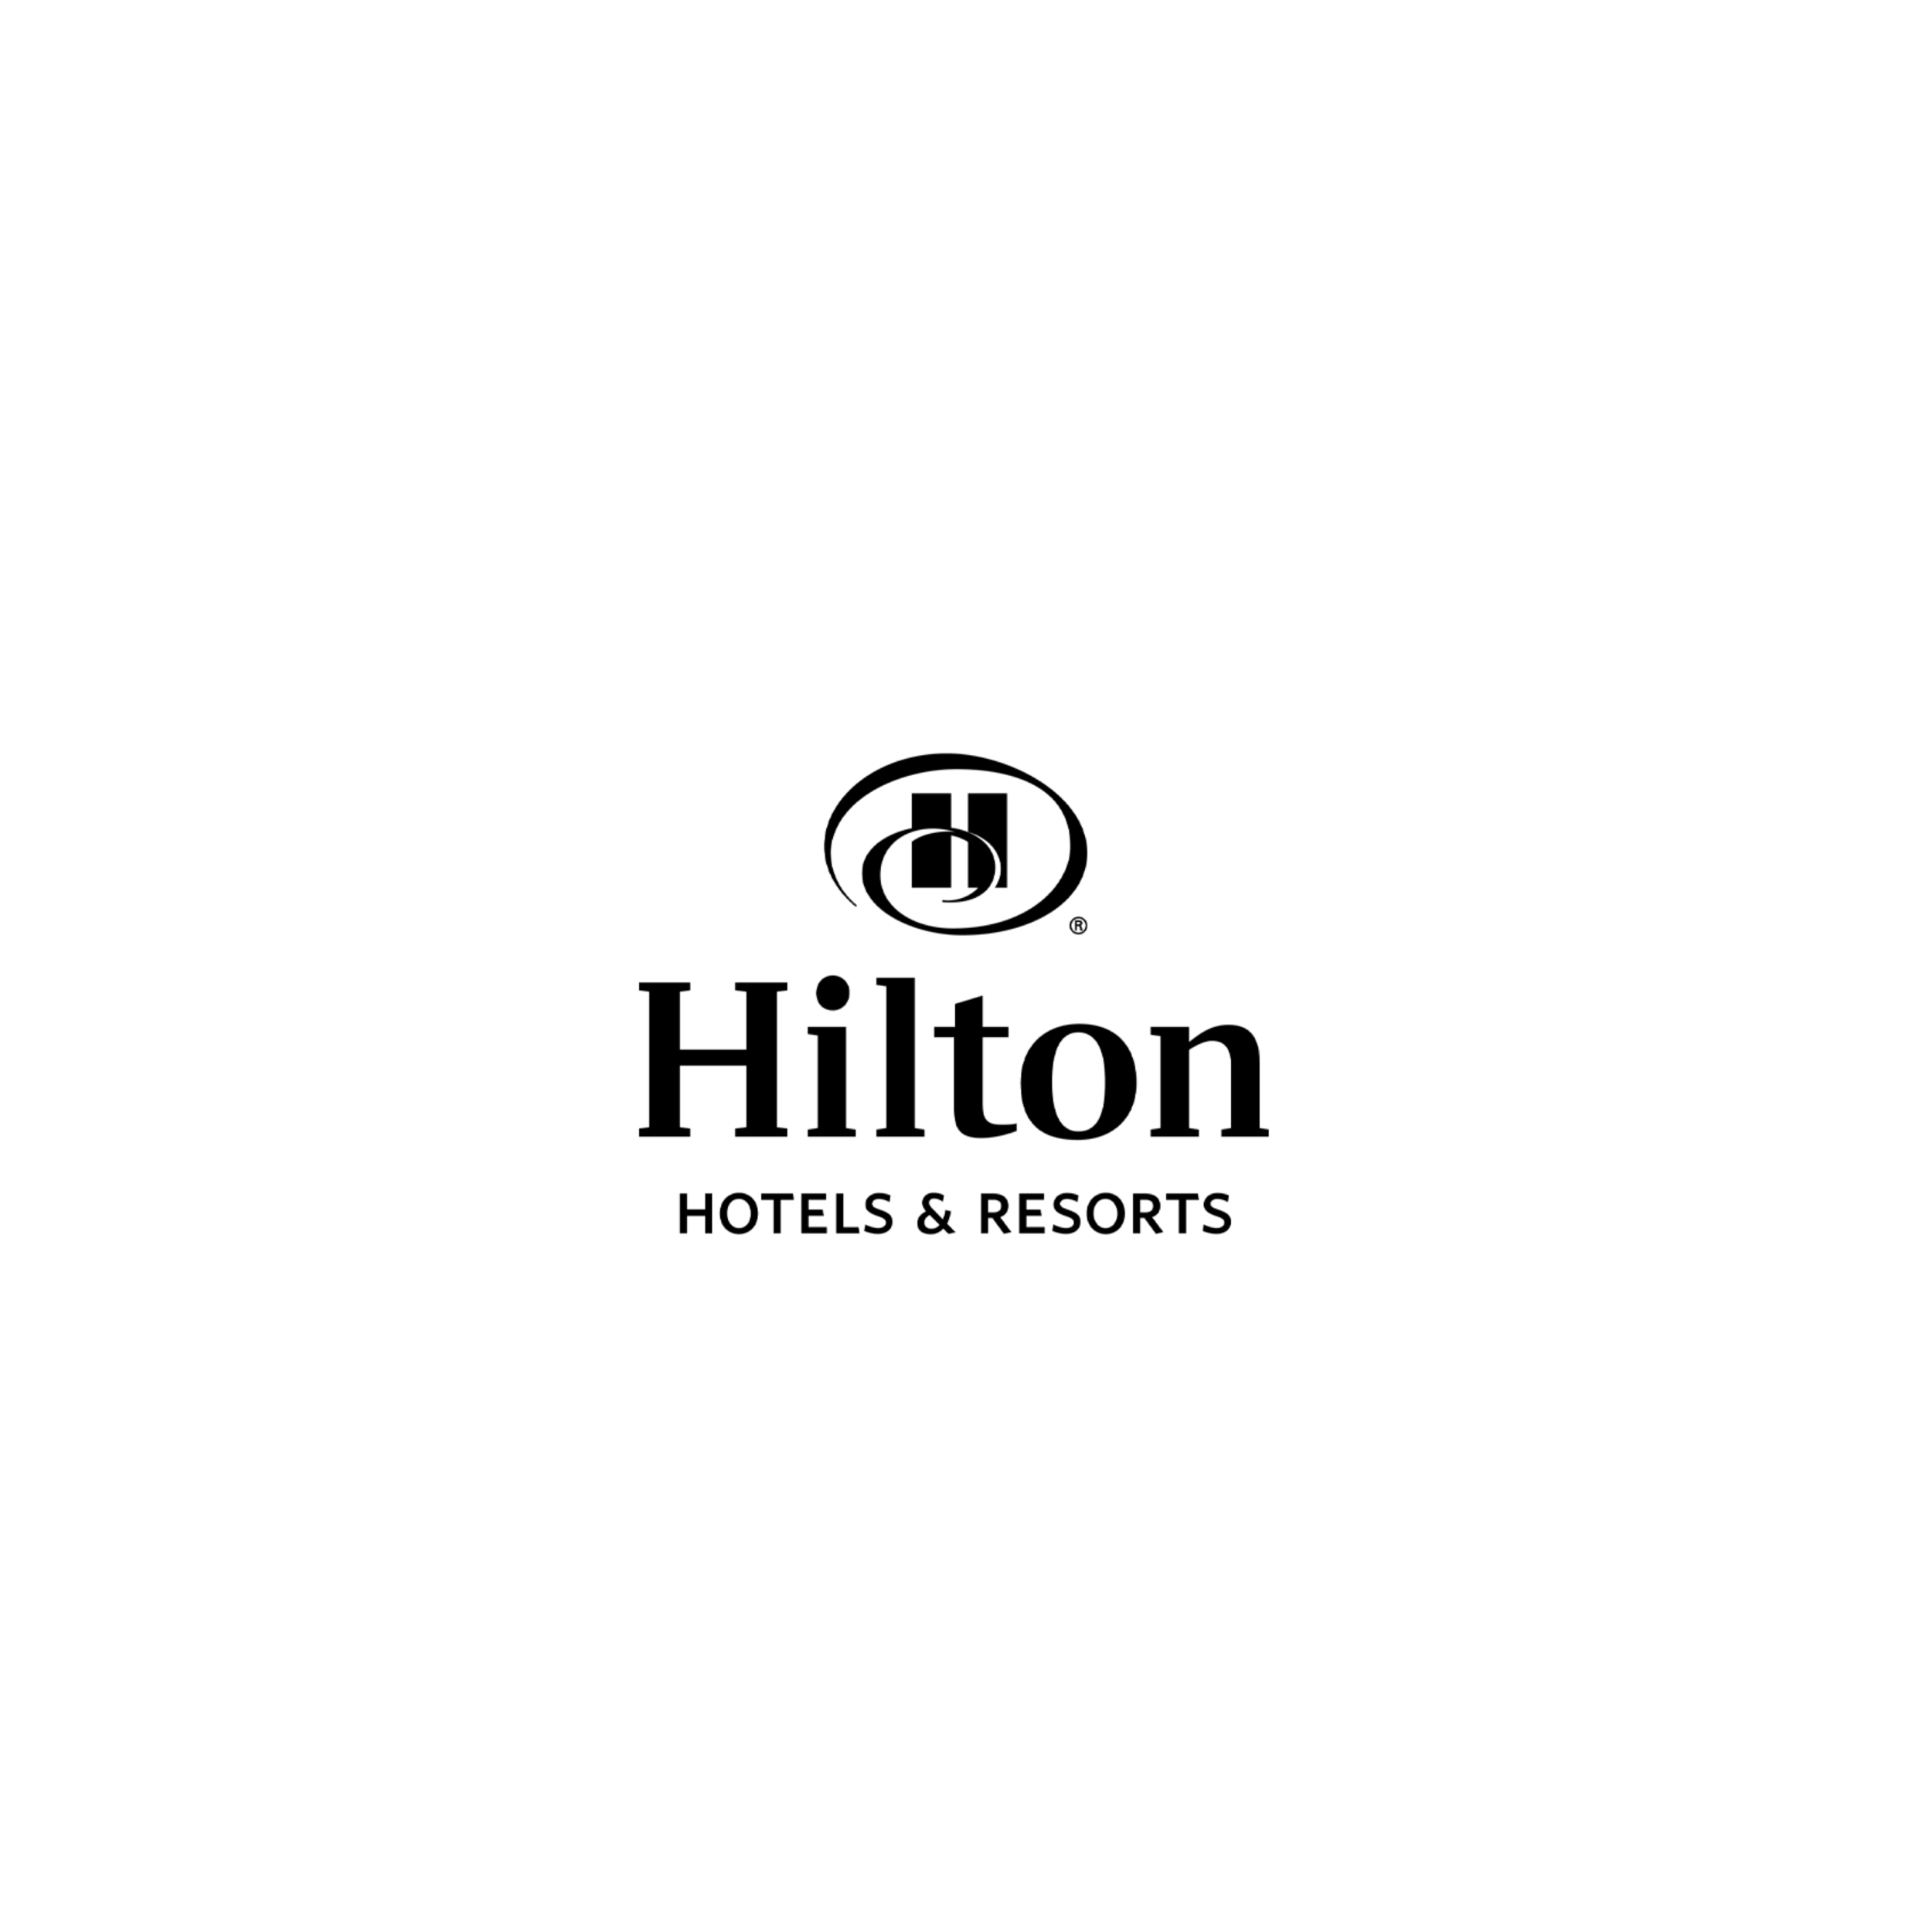 logo-hilton-dark.png